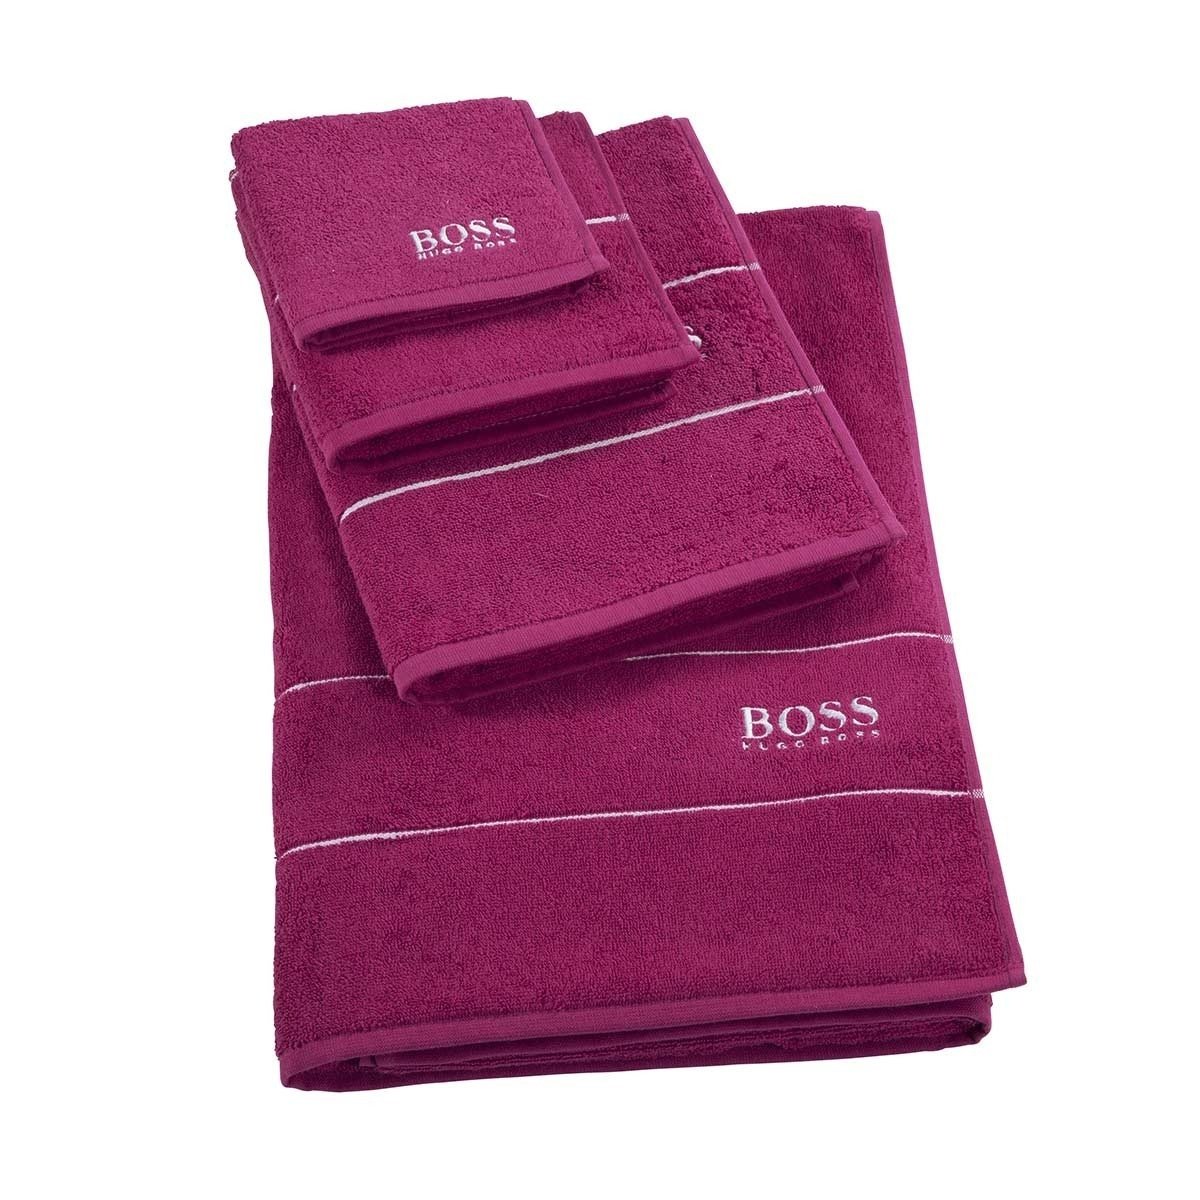 1pc Face Towel) HUGO BOSS Authentic 100 